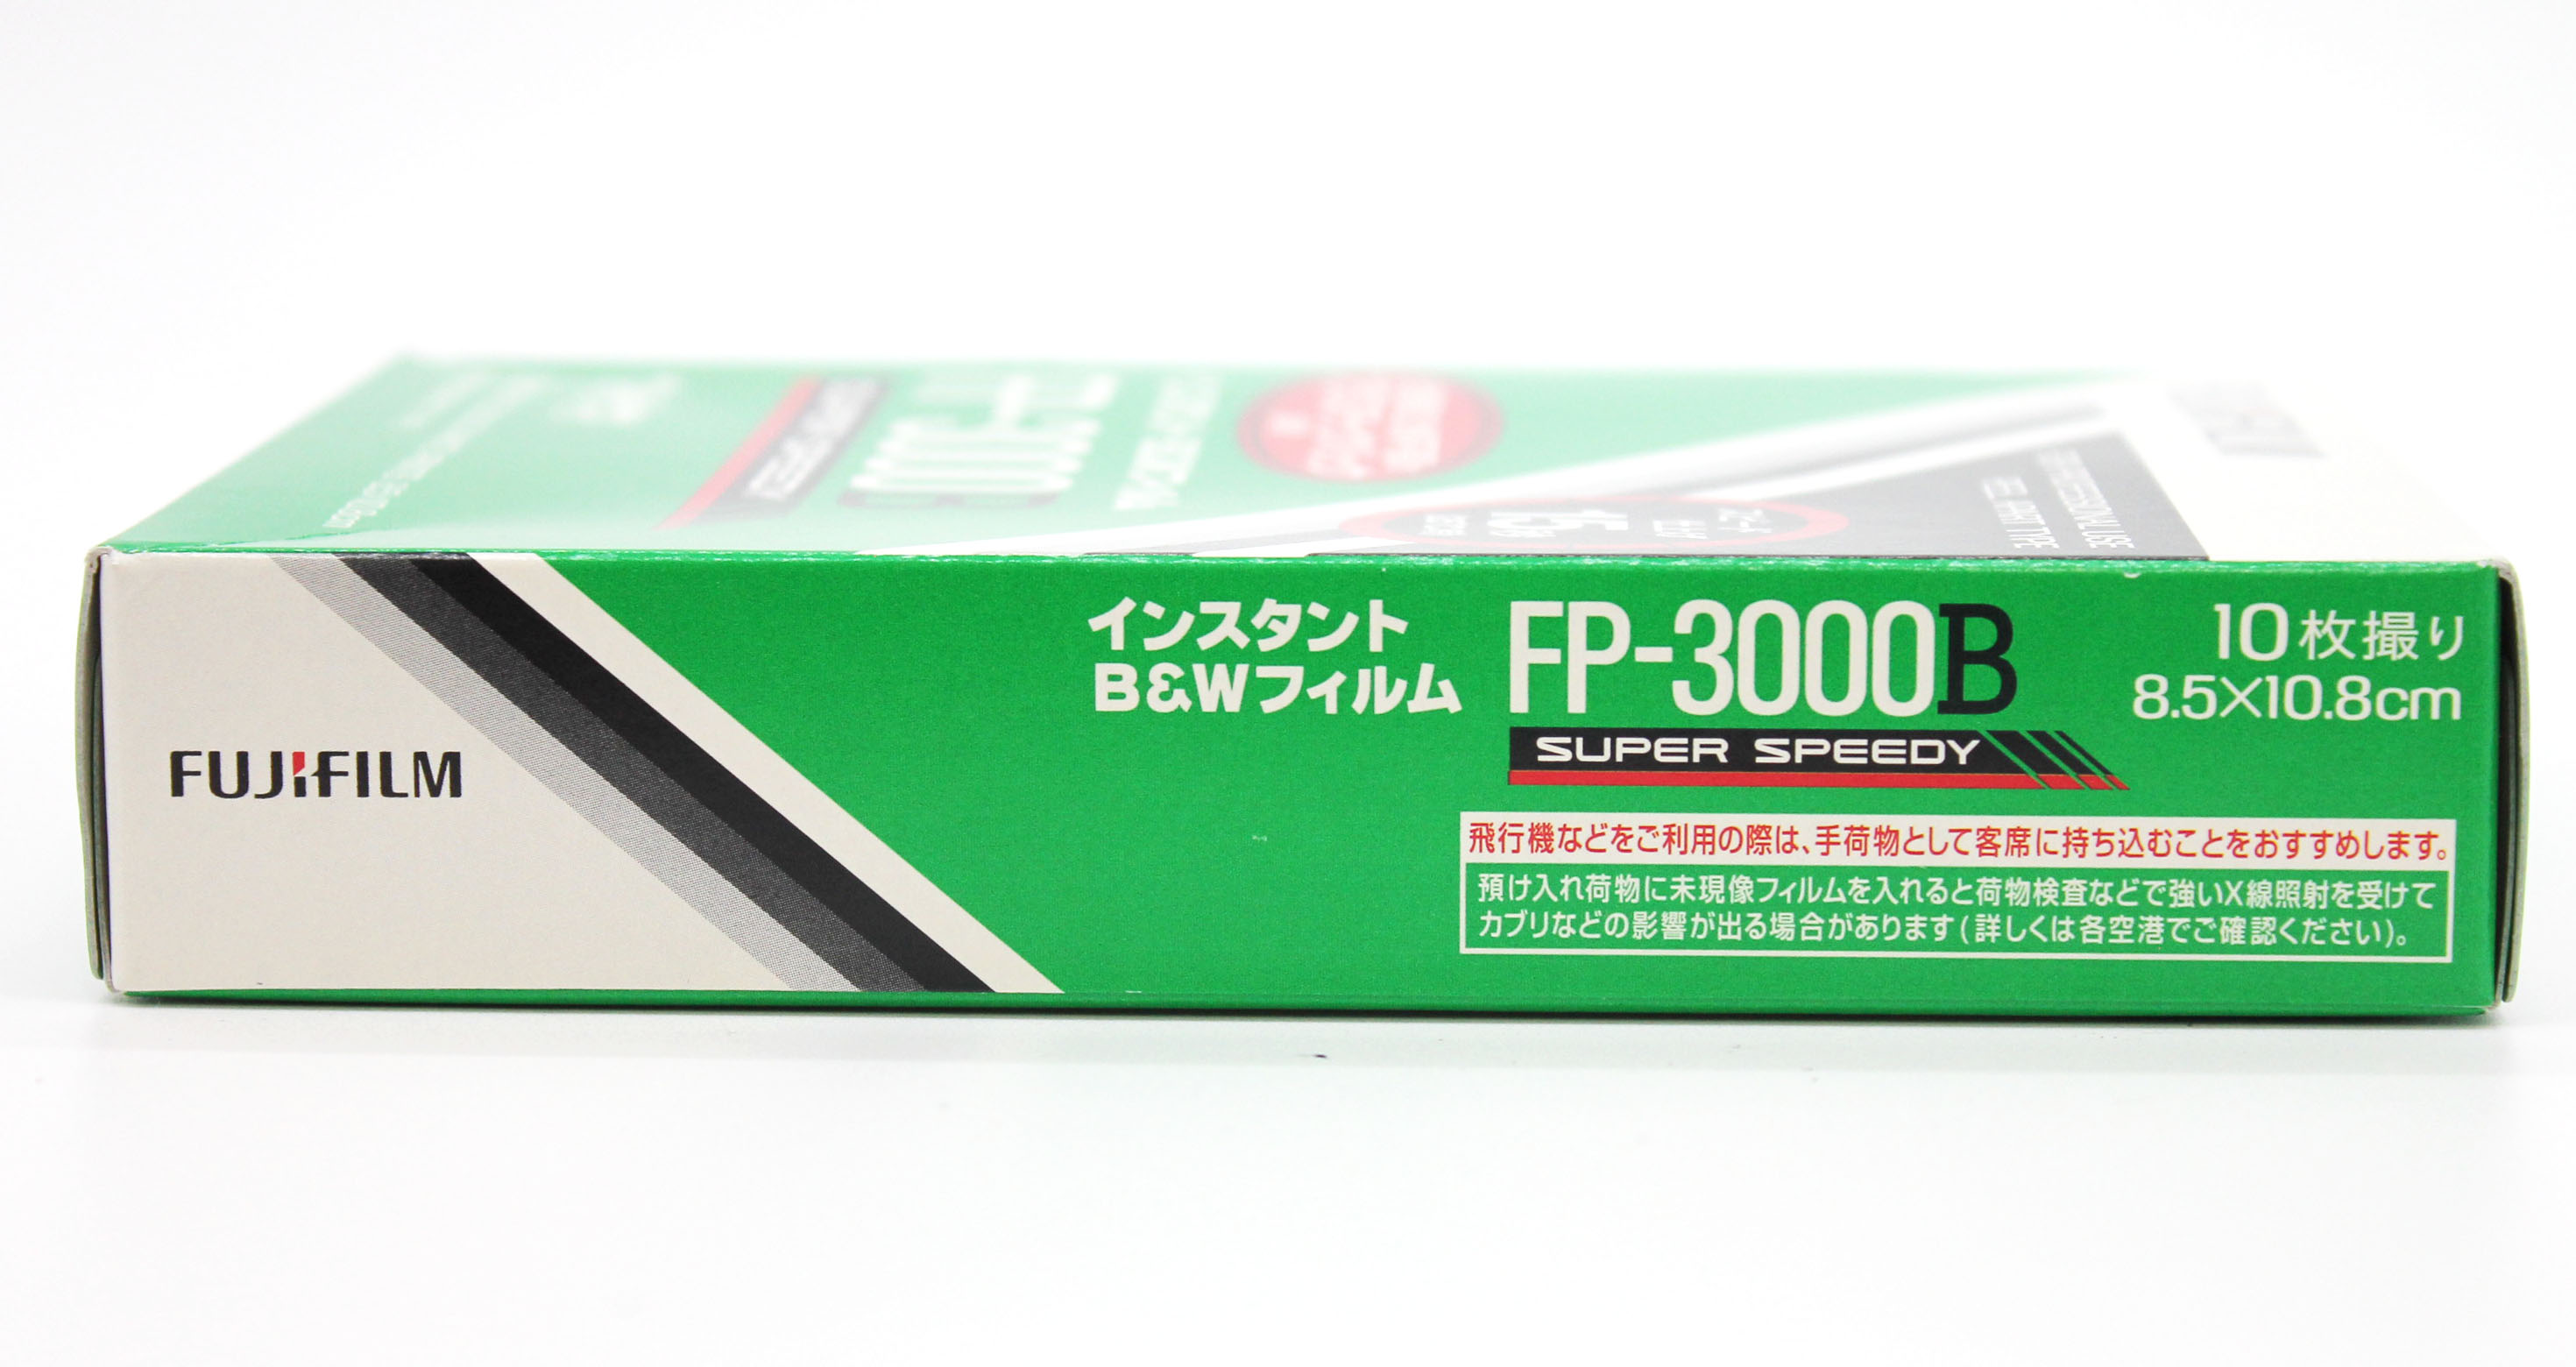  Fuji Fujifilm FP-3000B 8.5x10.8cm Instant Black & White Film (Expired 09/2013) from Japan Photo 6